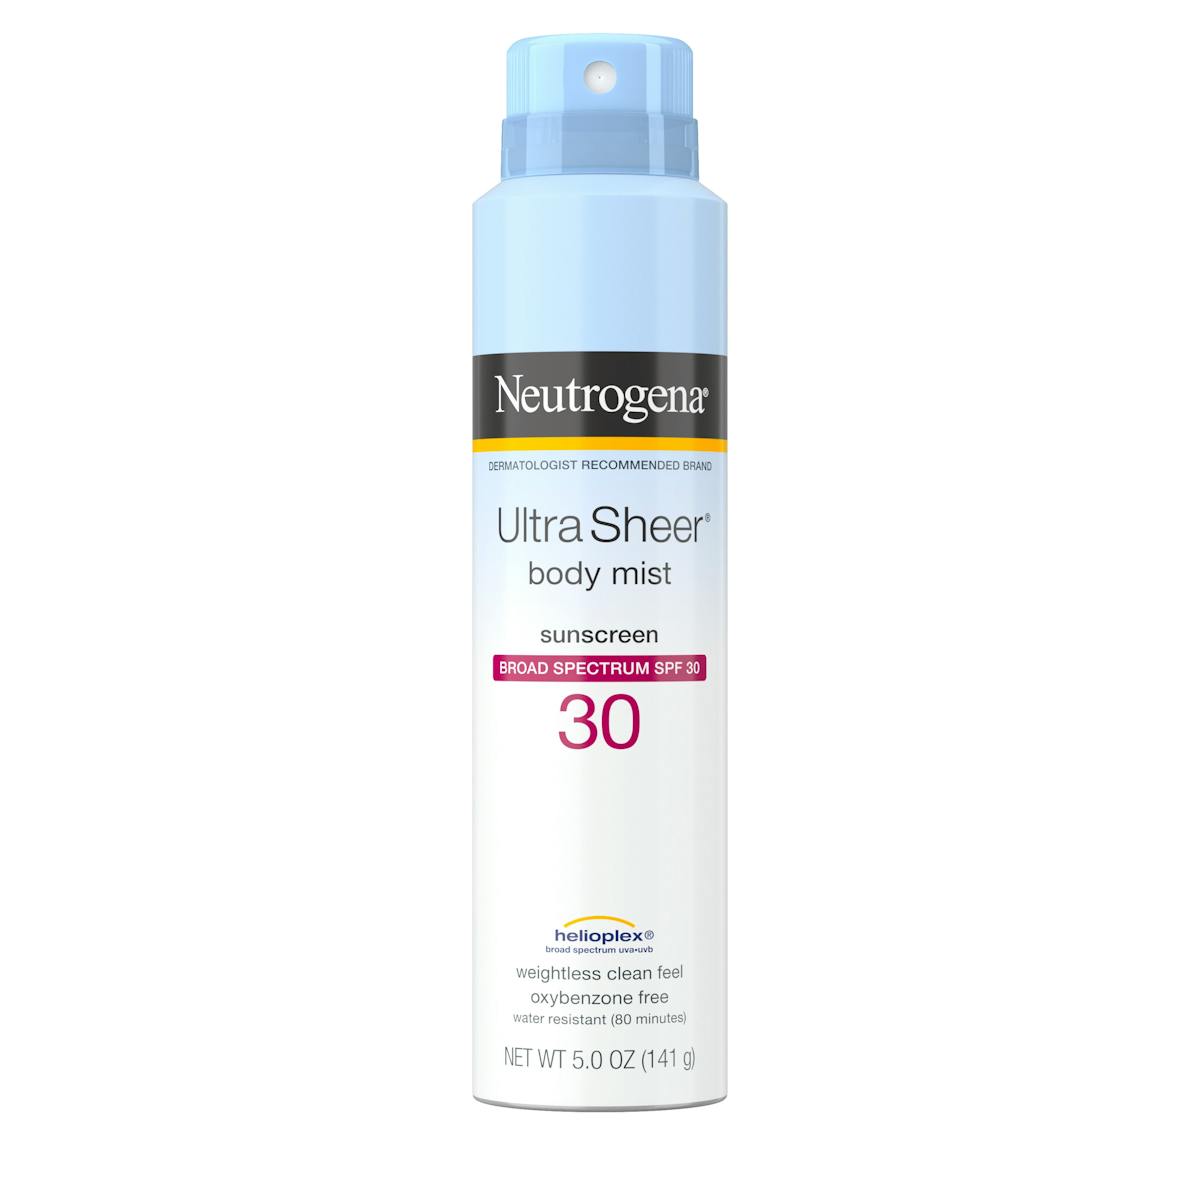 Spray anti-moisissure - Ultranature